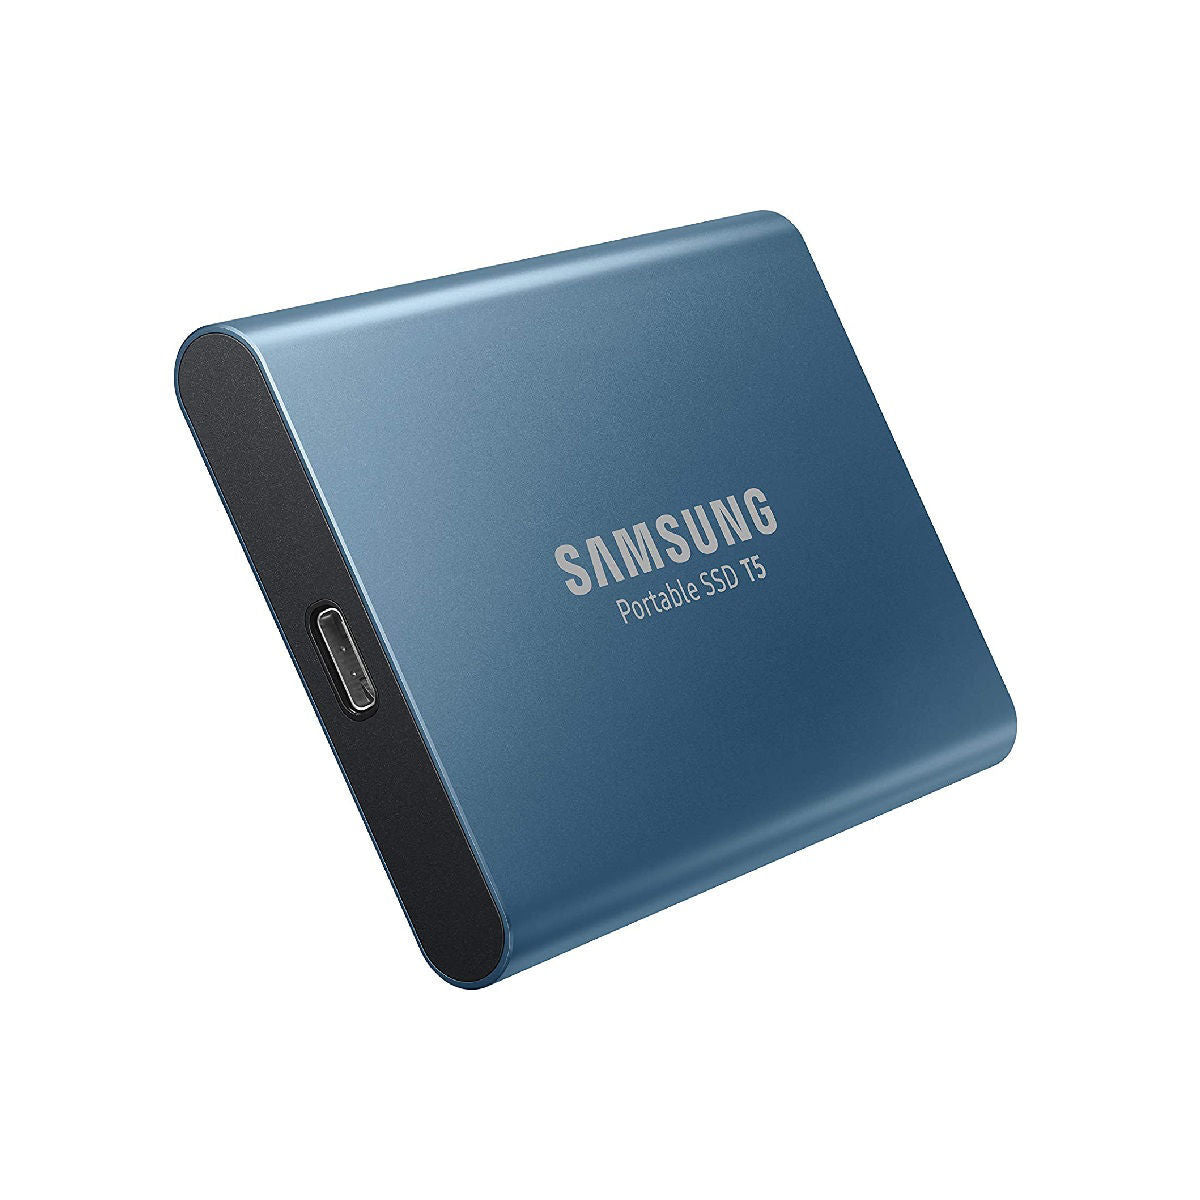 Samsung T5 500GB USB 3.1 Gen 2 10gbps Type C